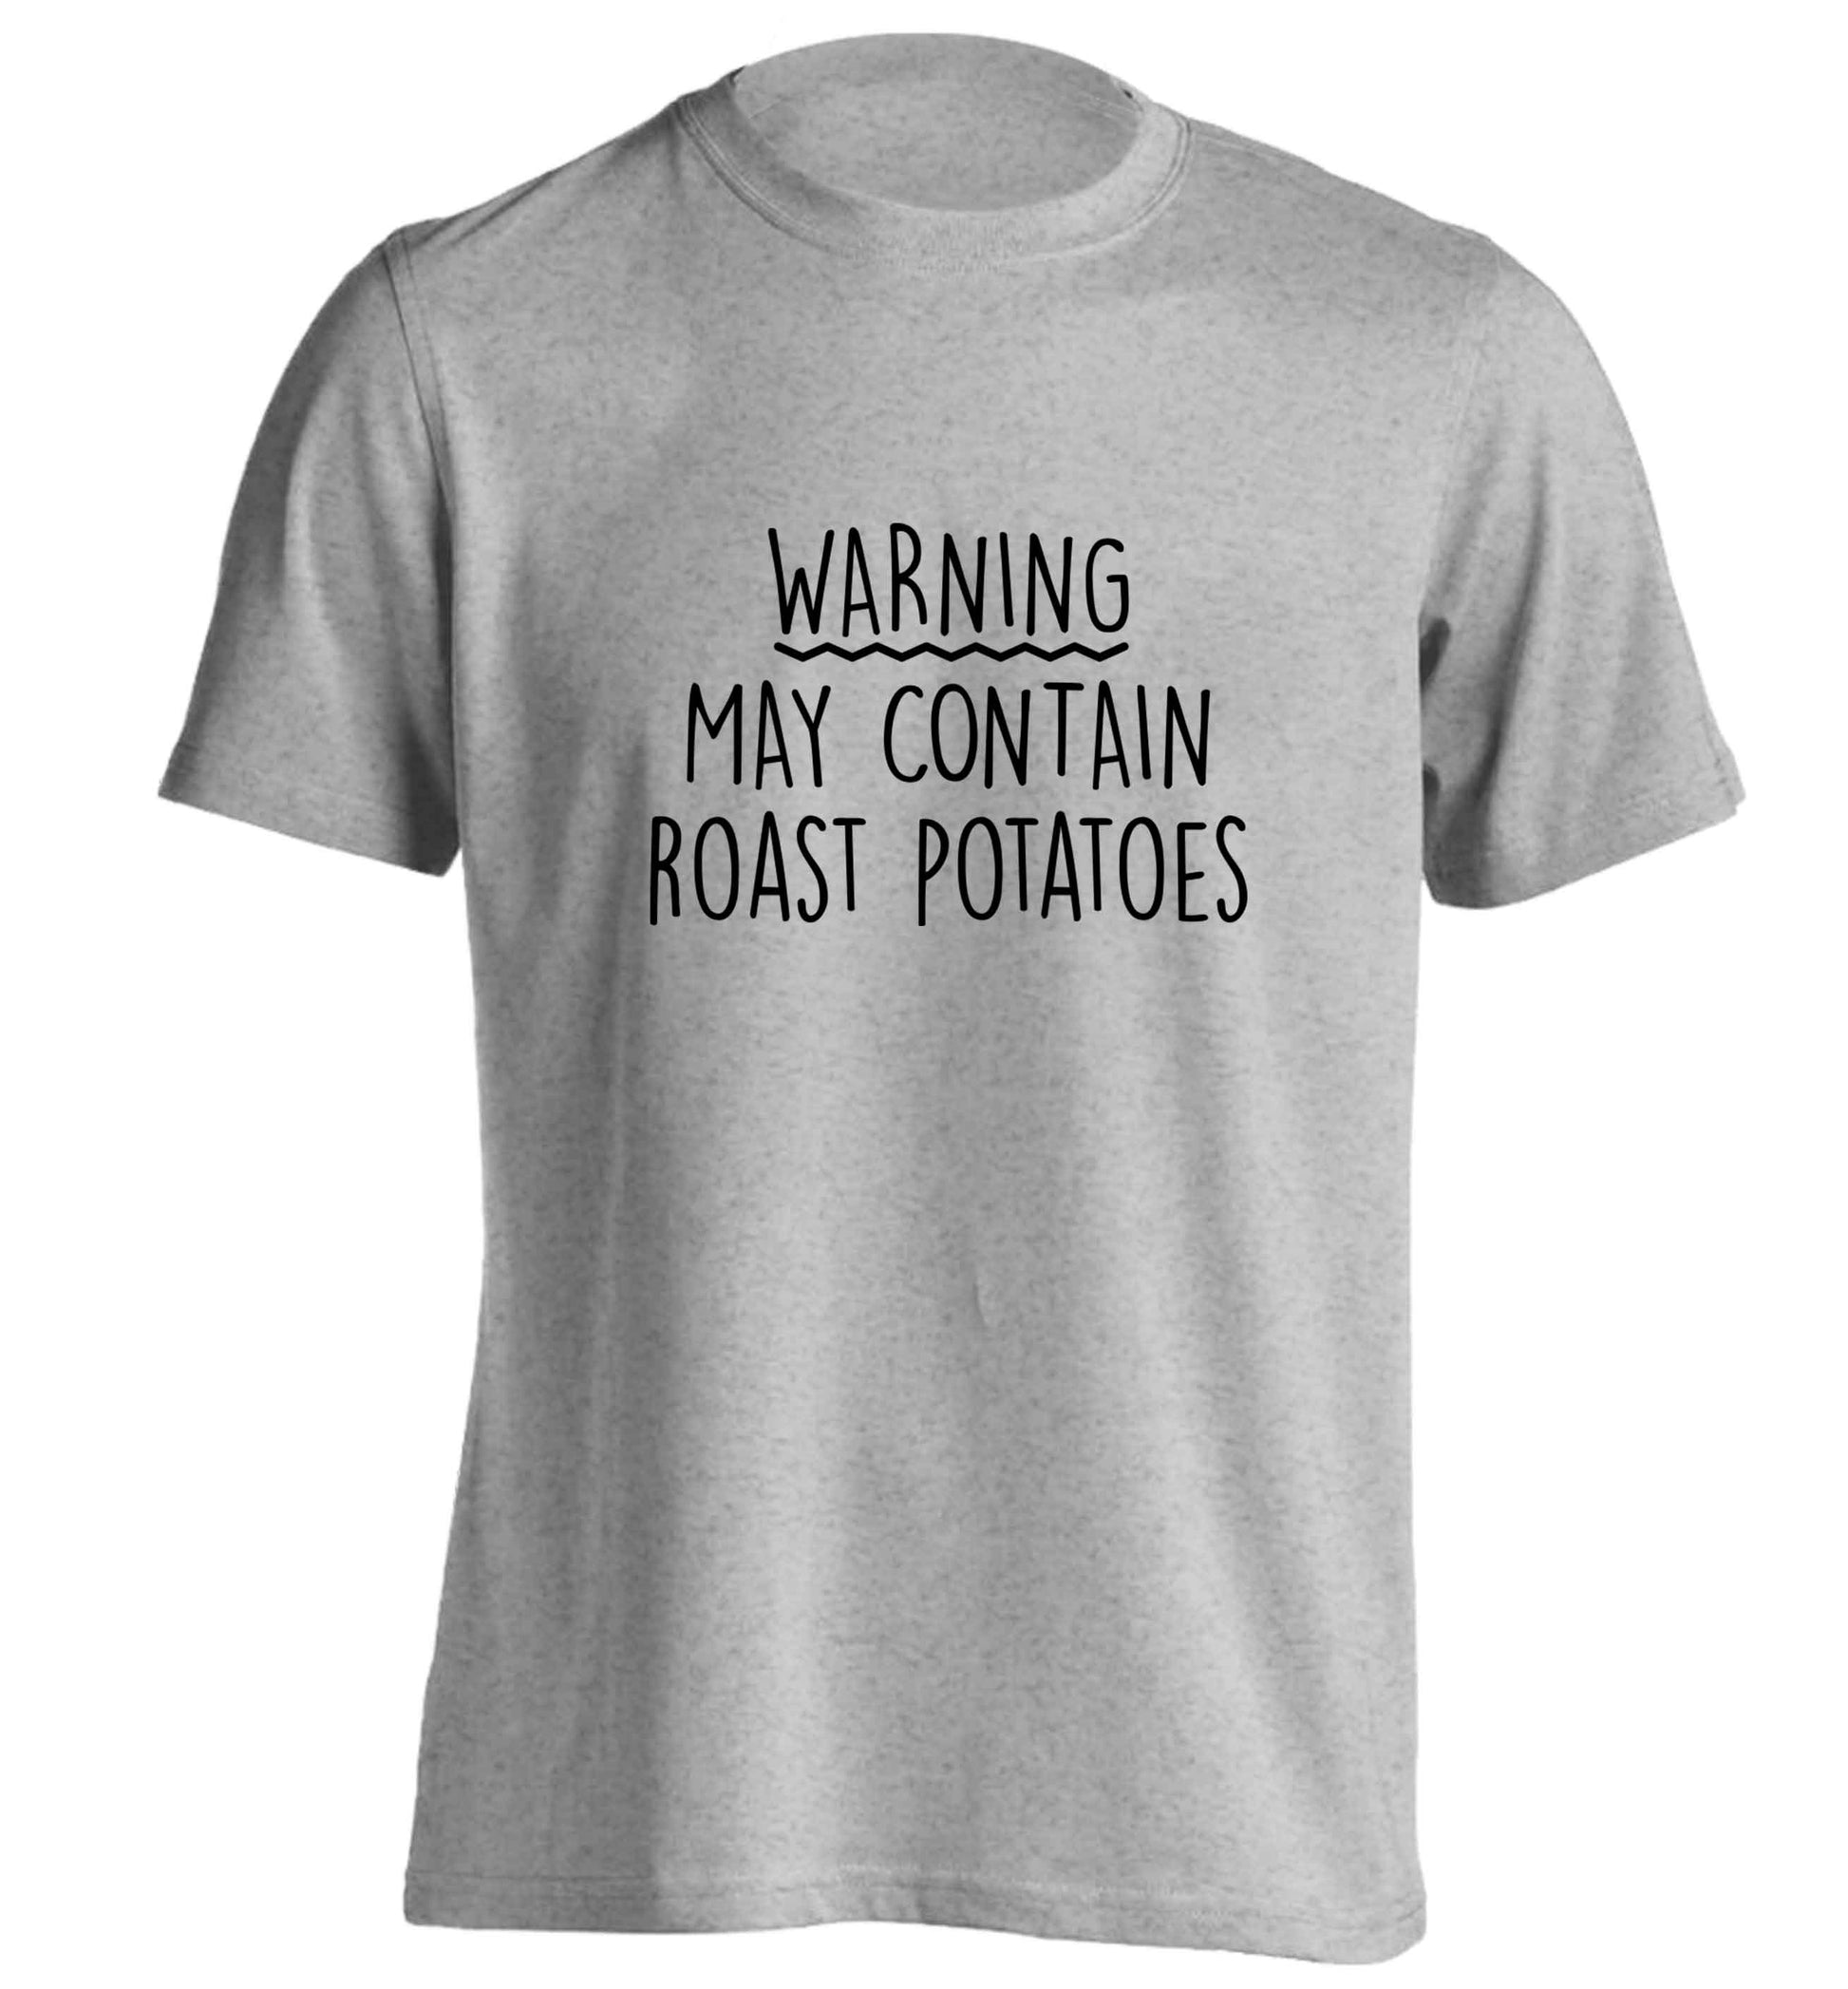 Warning may containg roast potatoes adults unisex grey Tshirt 2XL